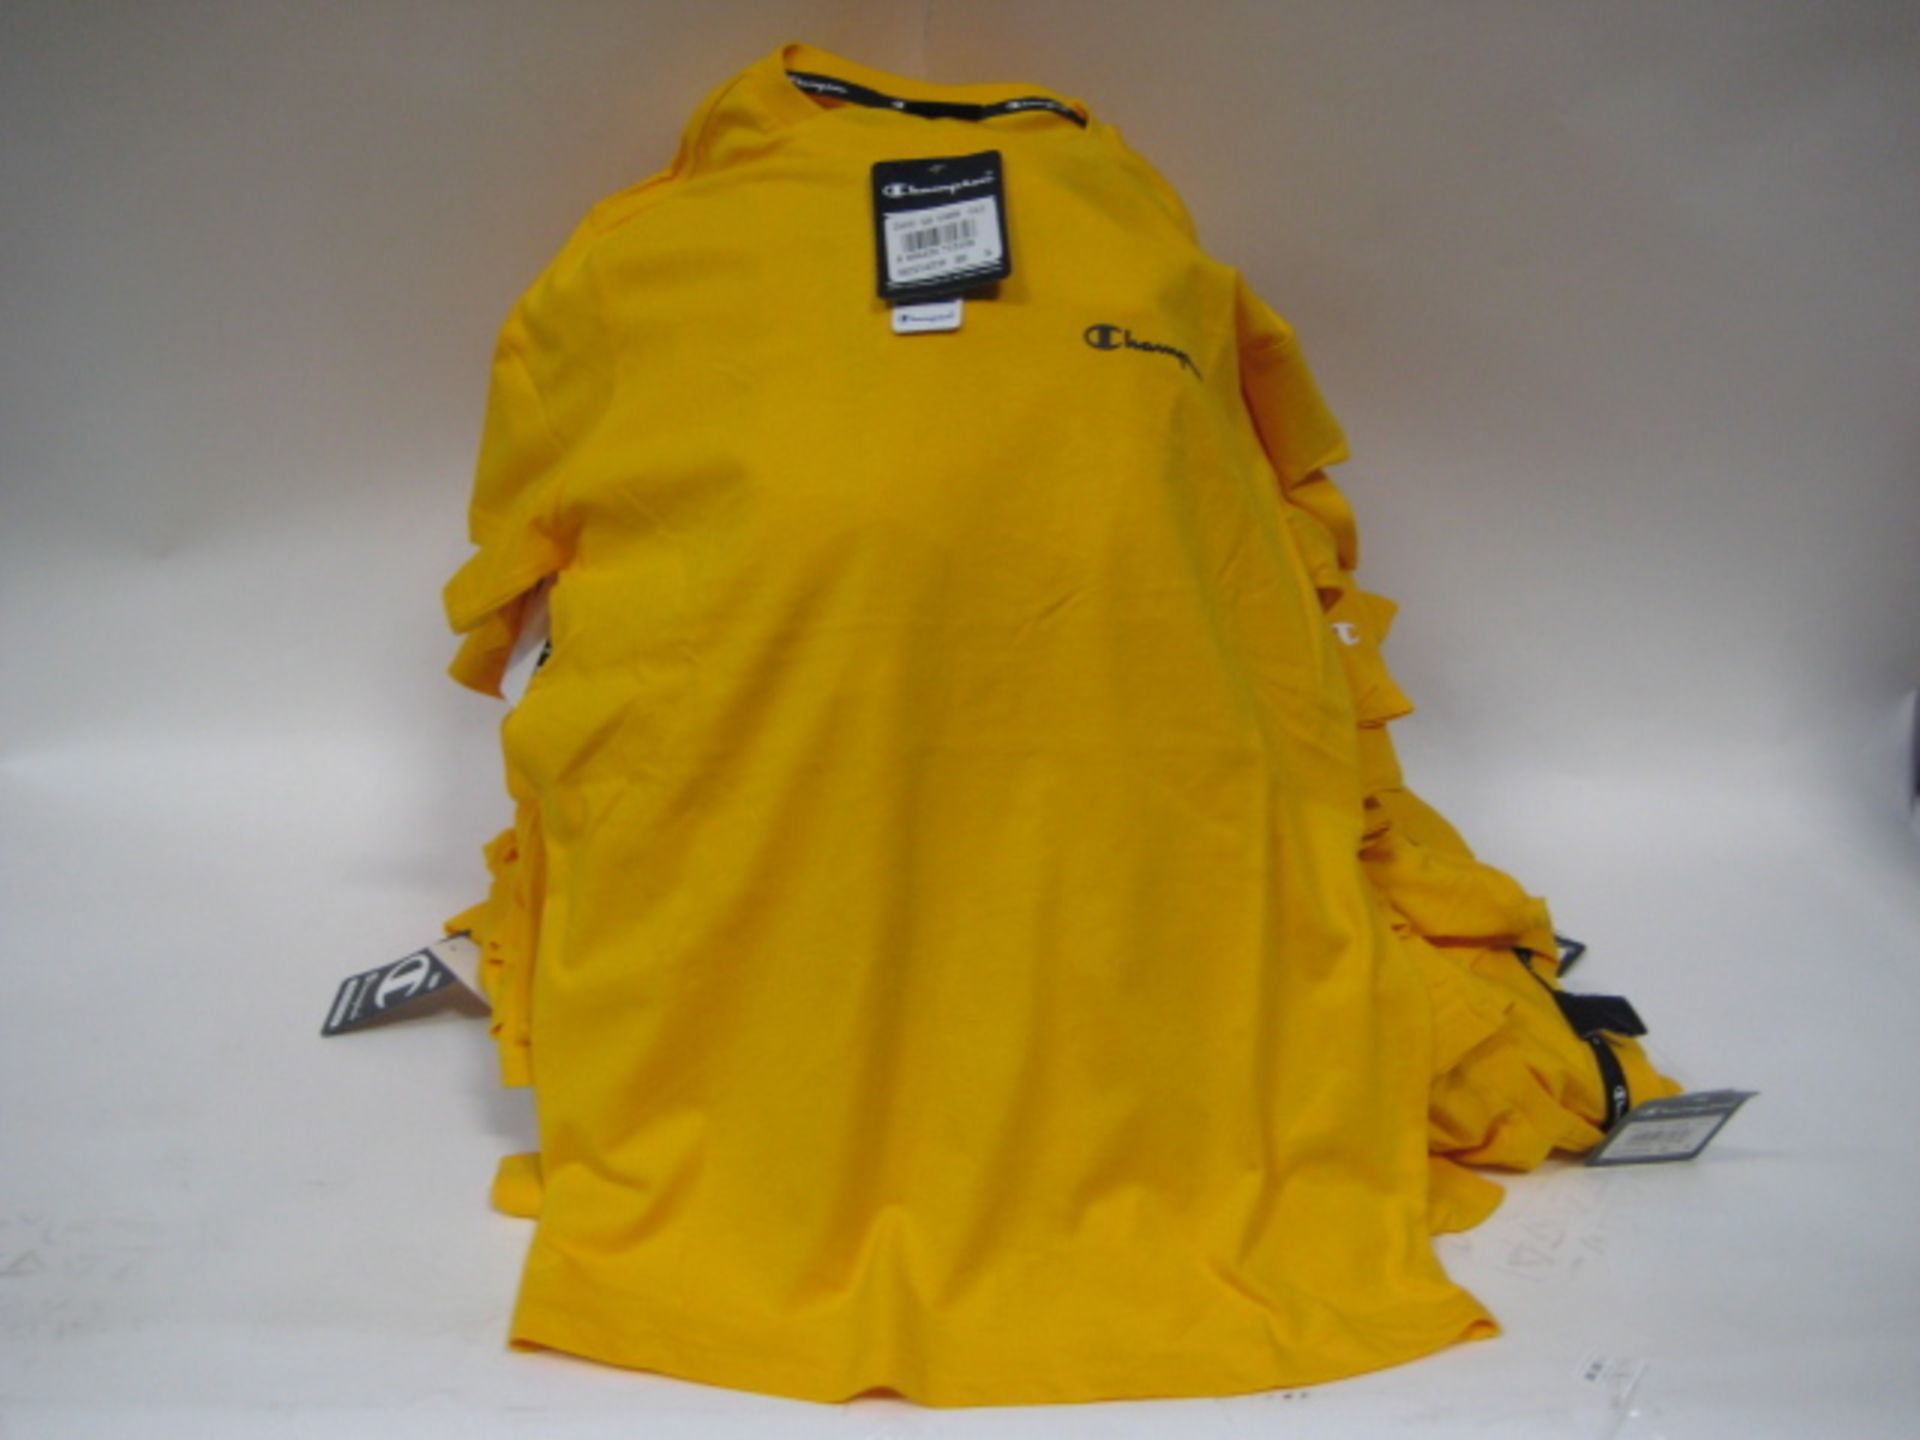 Box containing 65 Champion yellow T-shirts sizes predominately small